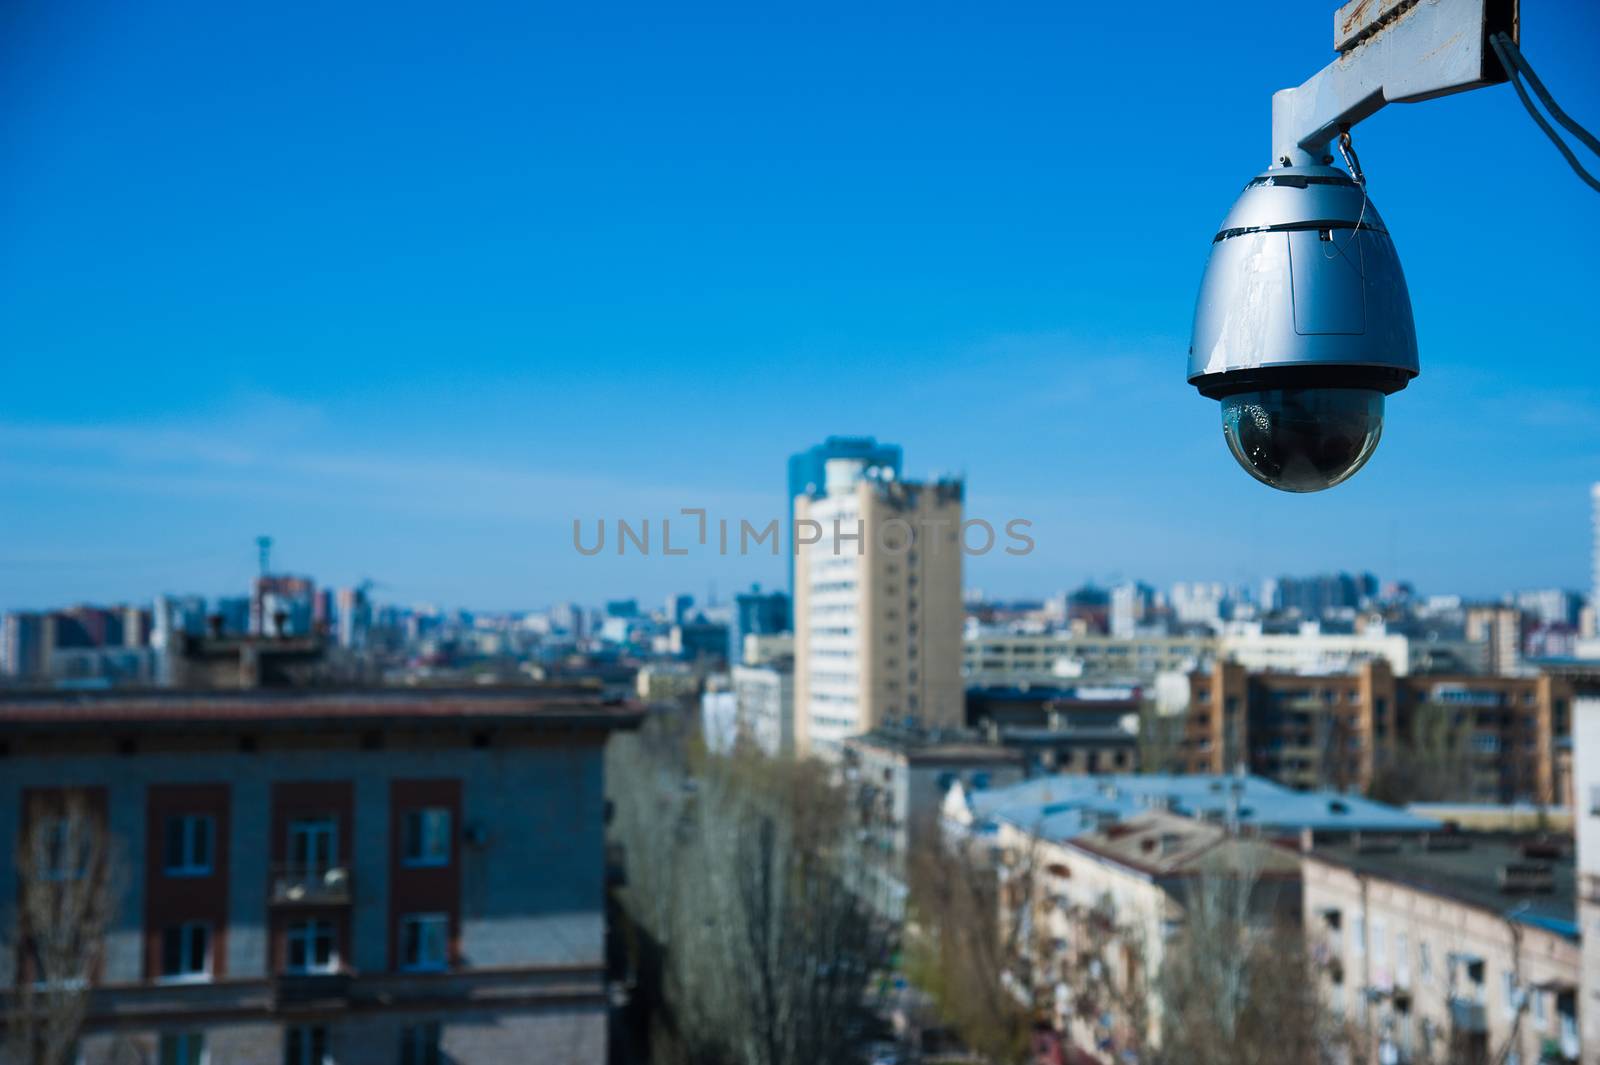 Modern CCTV camera. Concept of surveillance and monitoring by grigorenko